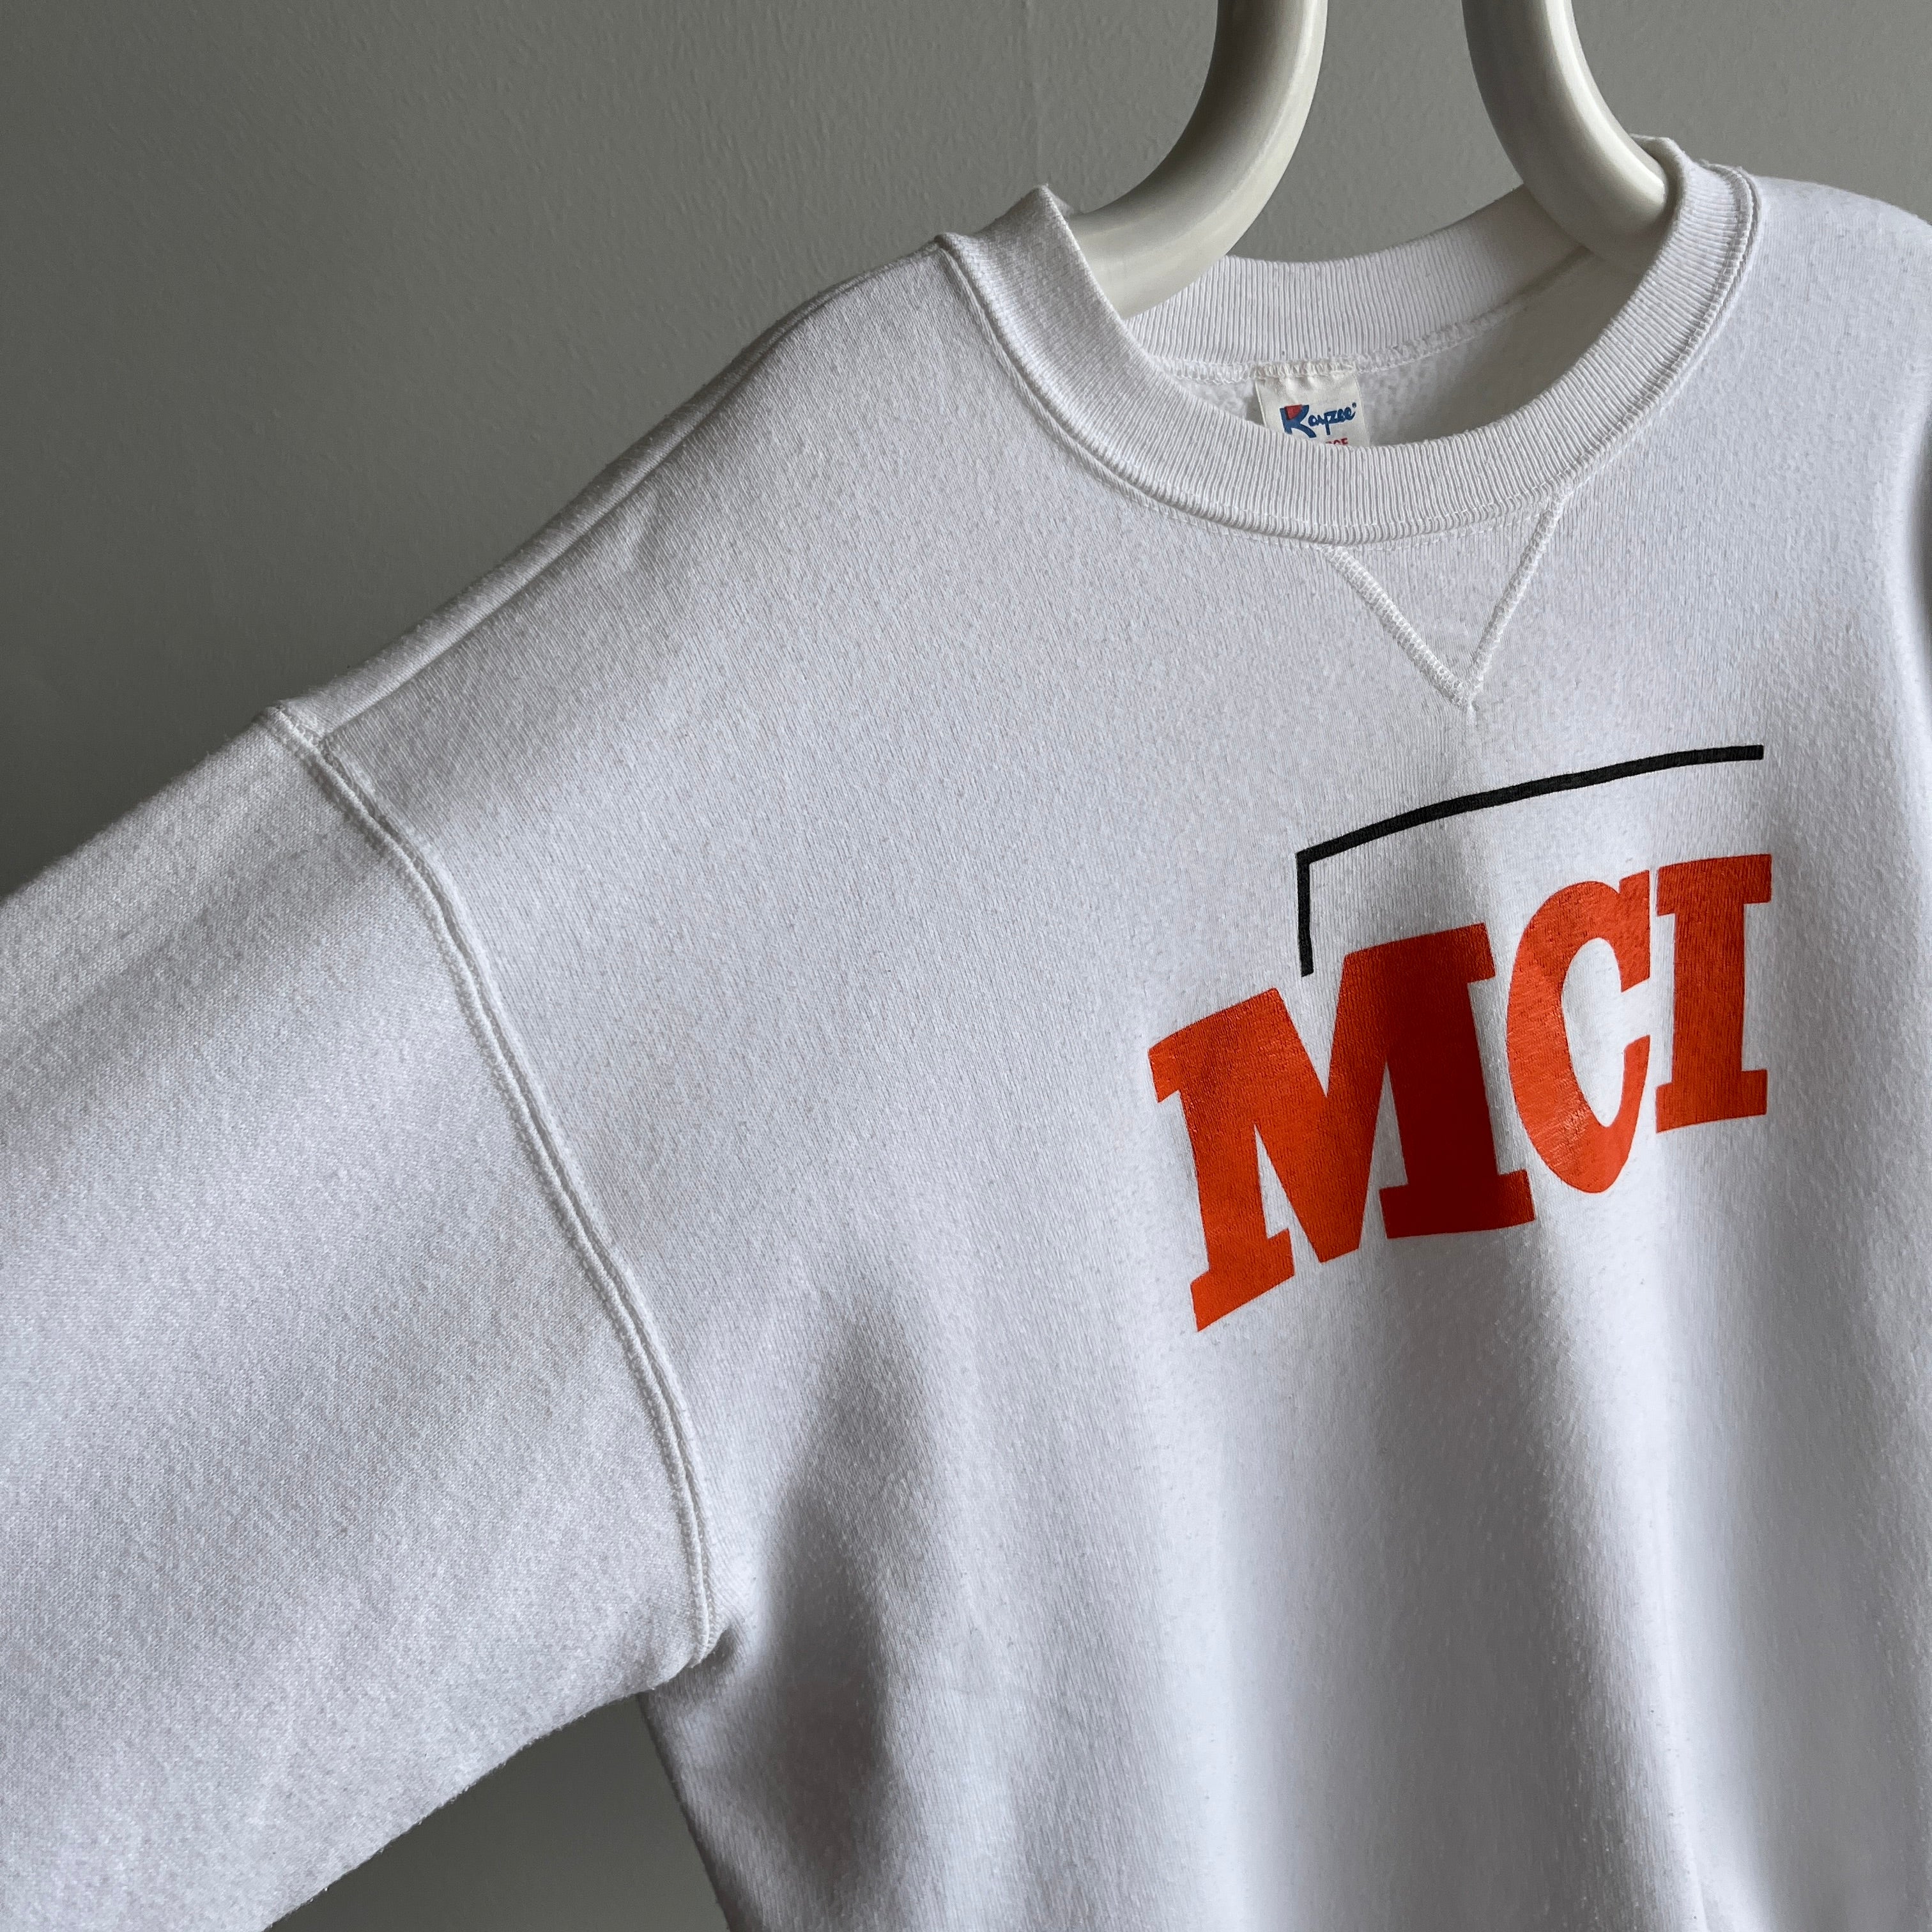 1980s MCI Sweatshirt